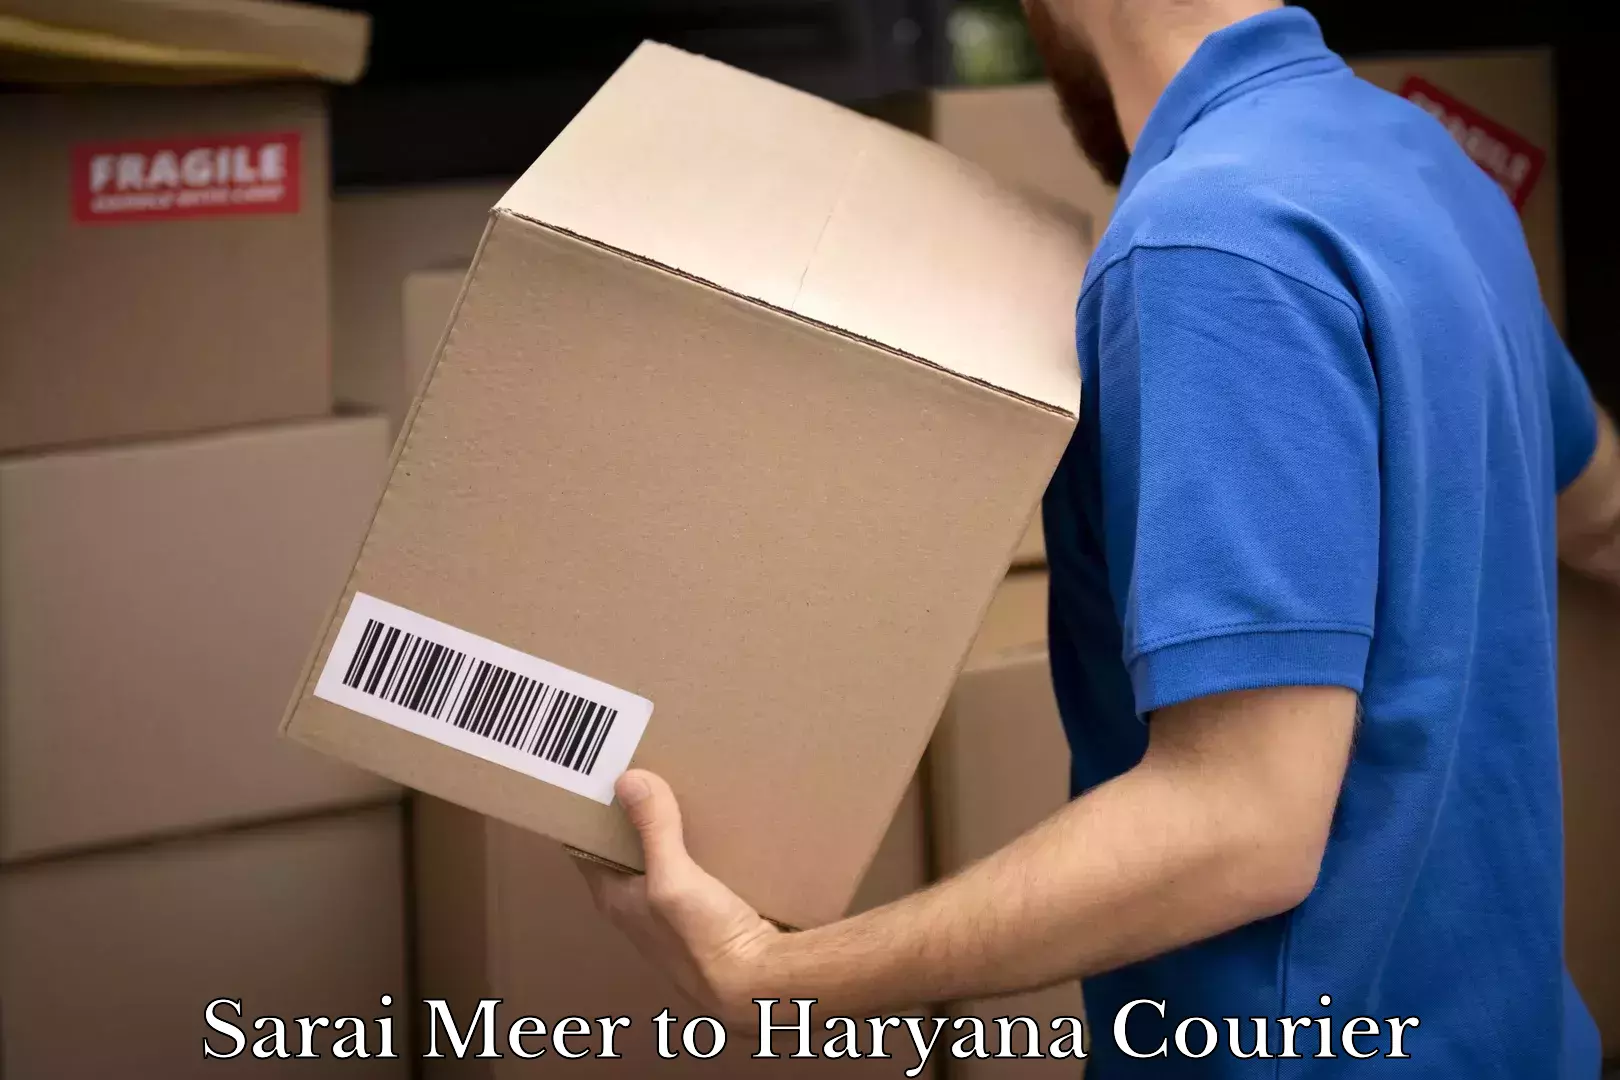 Courier service innovation Sarai Meer to Haryana